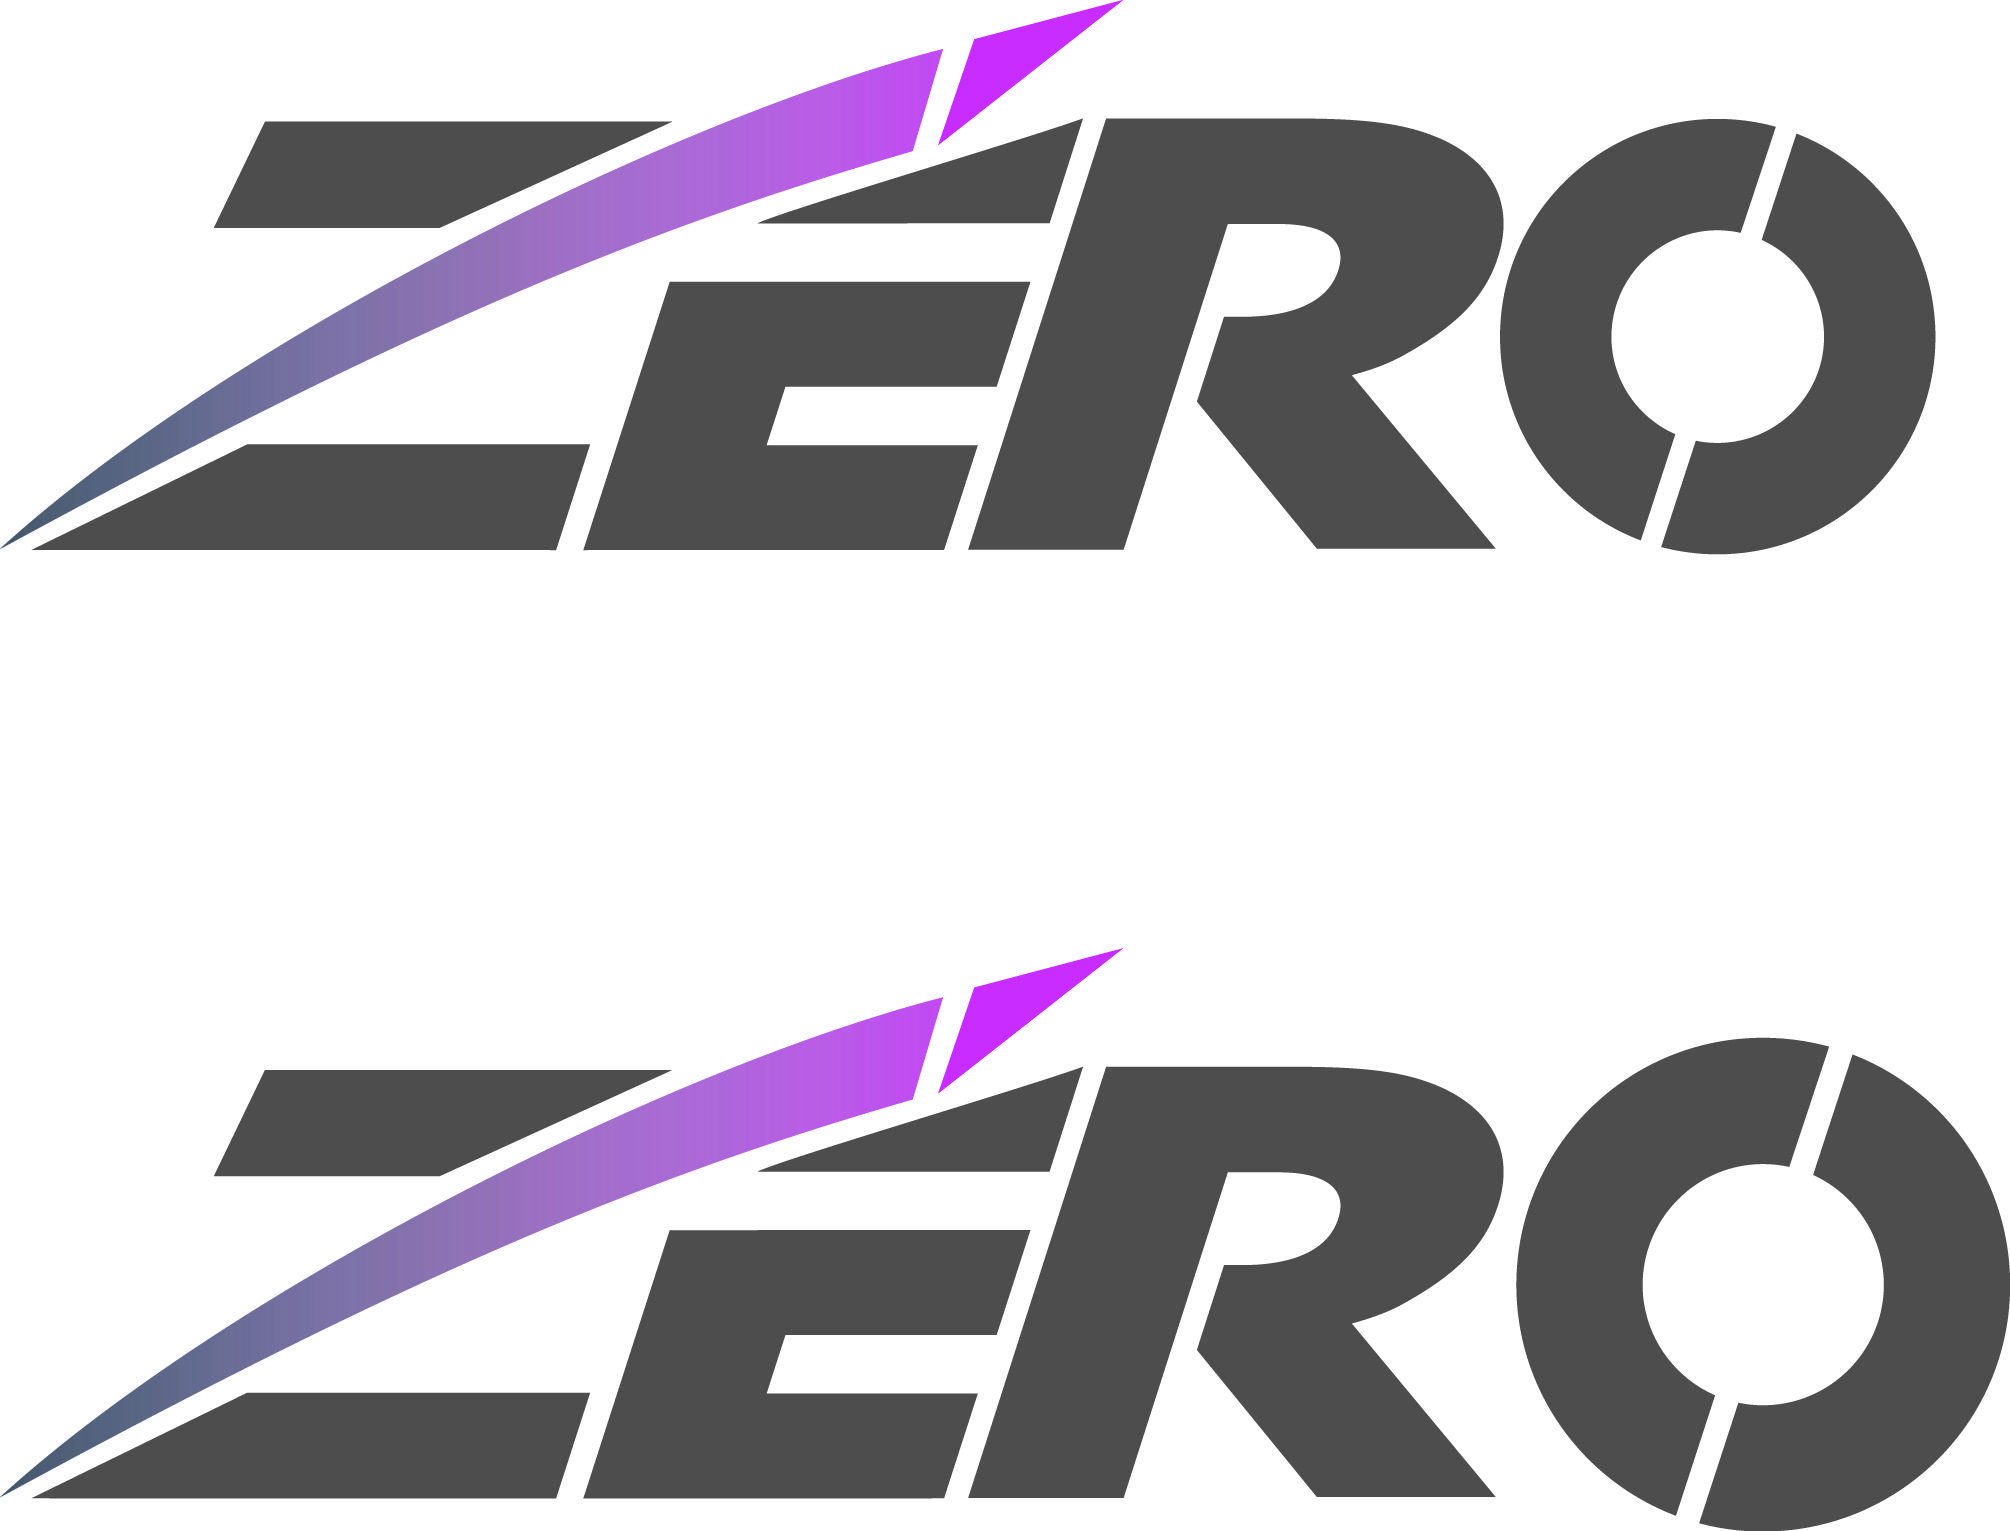 Zero Logo - Index of /Images/Zero/logos